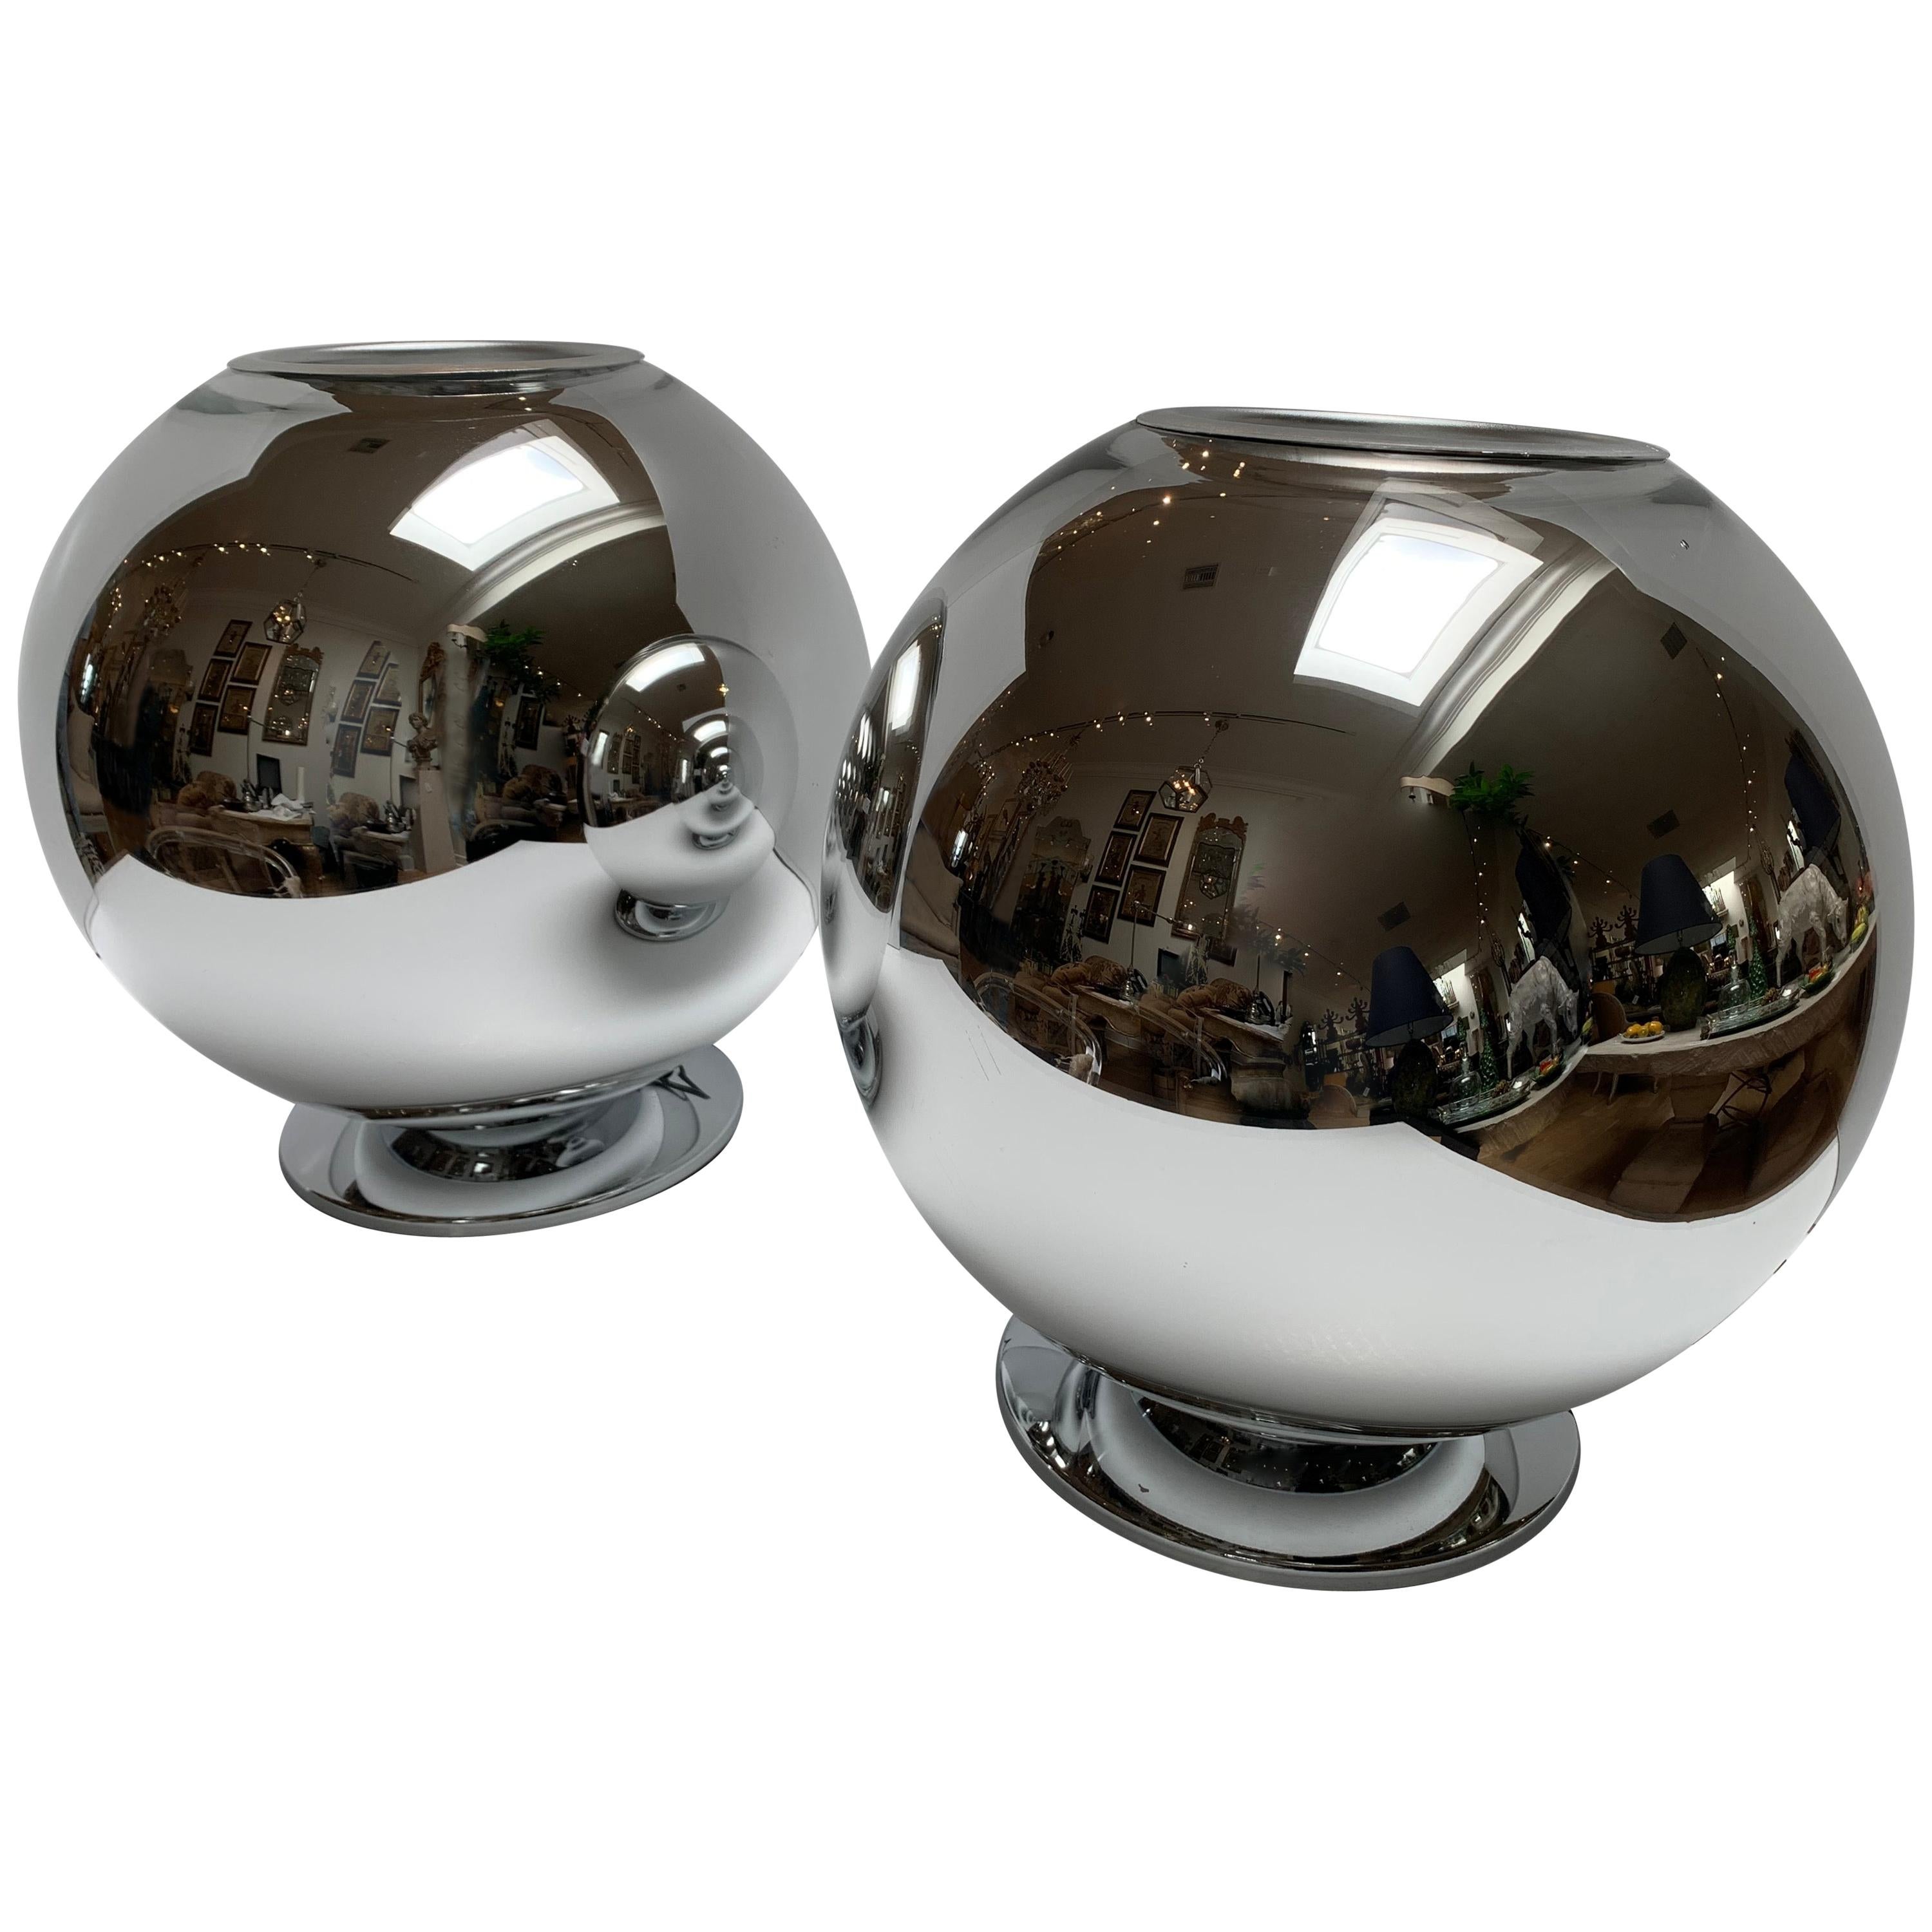 Rare Pair of Italian Mercury Glass Sphere Lamps, Excellent Condition